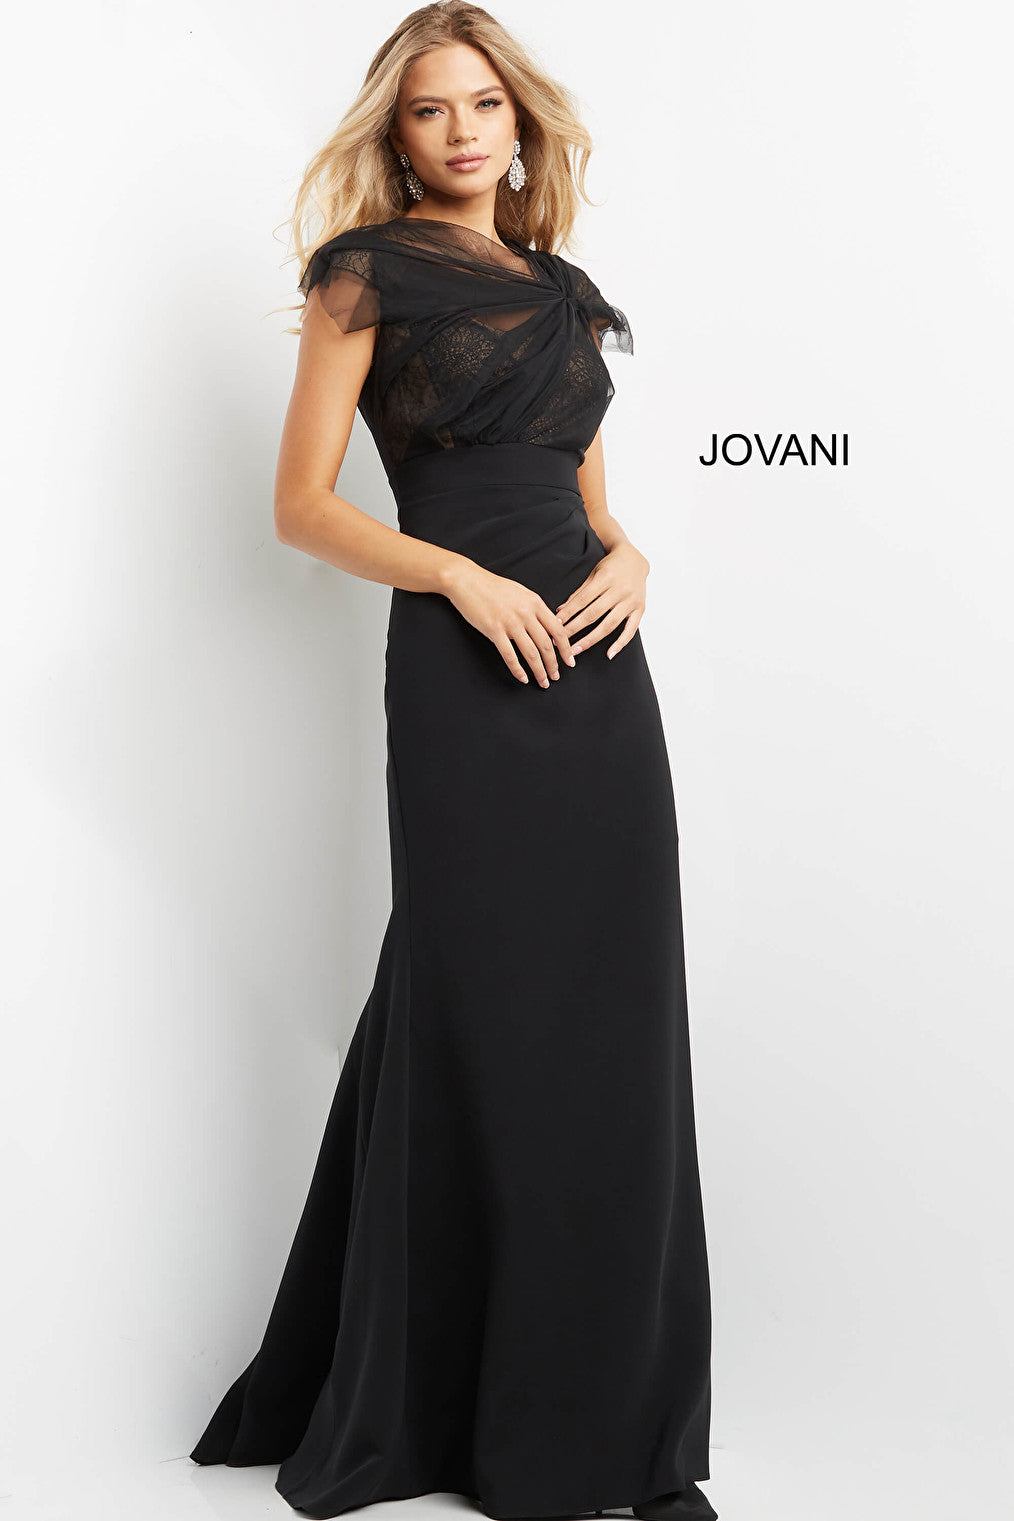 Jovani 05675 Black Ruched Bodice Empire Waist Evening Dress